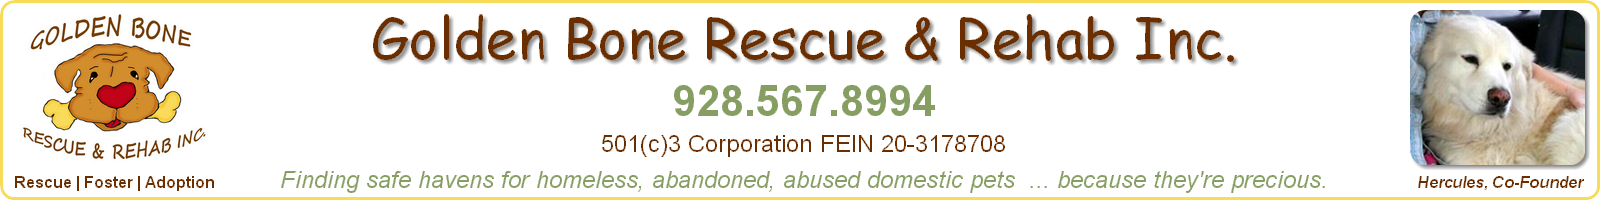 Contact Us - Golden Bone Rescue & Rehab, Inc., Sedona, Arizona